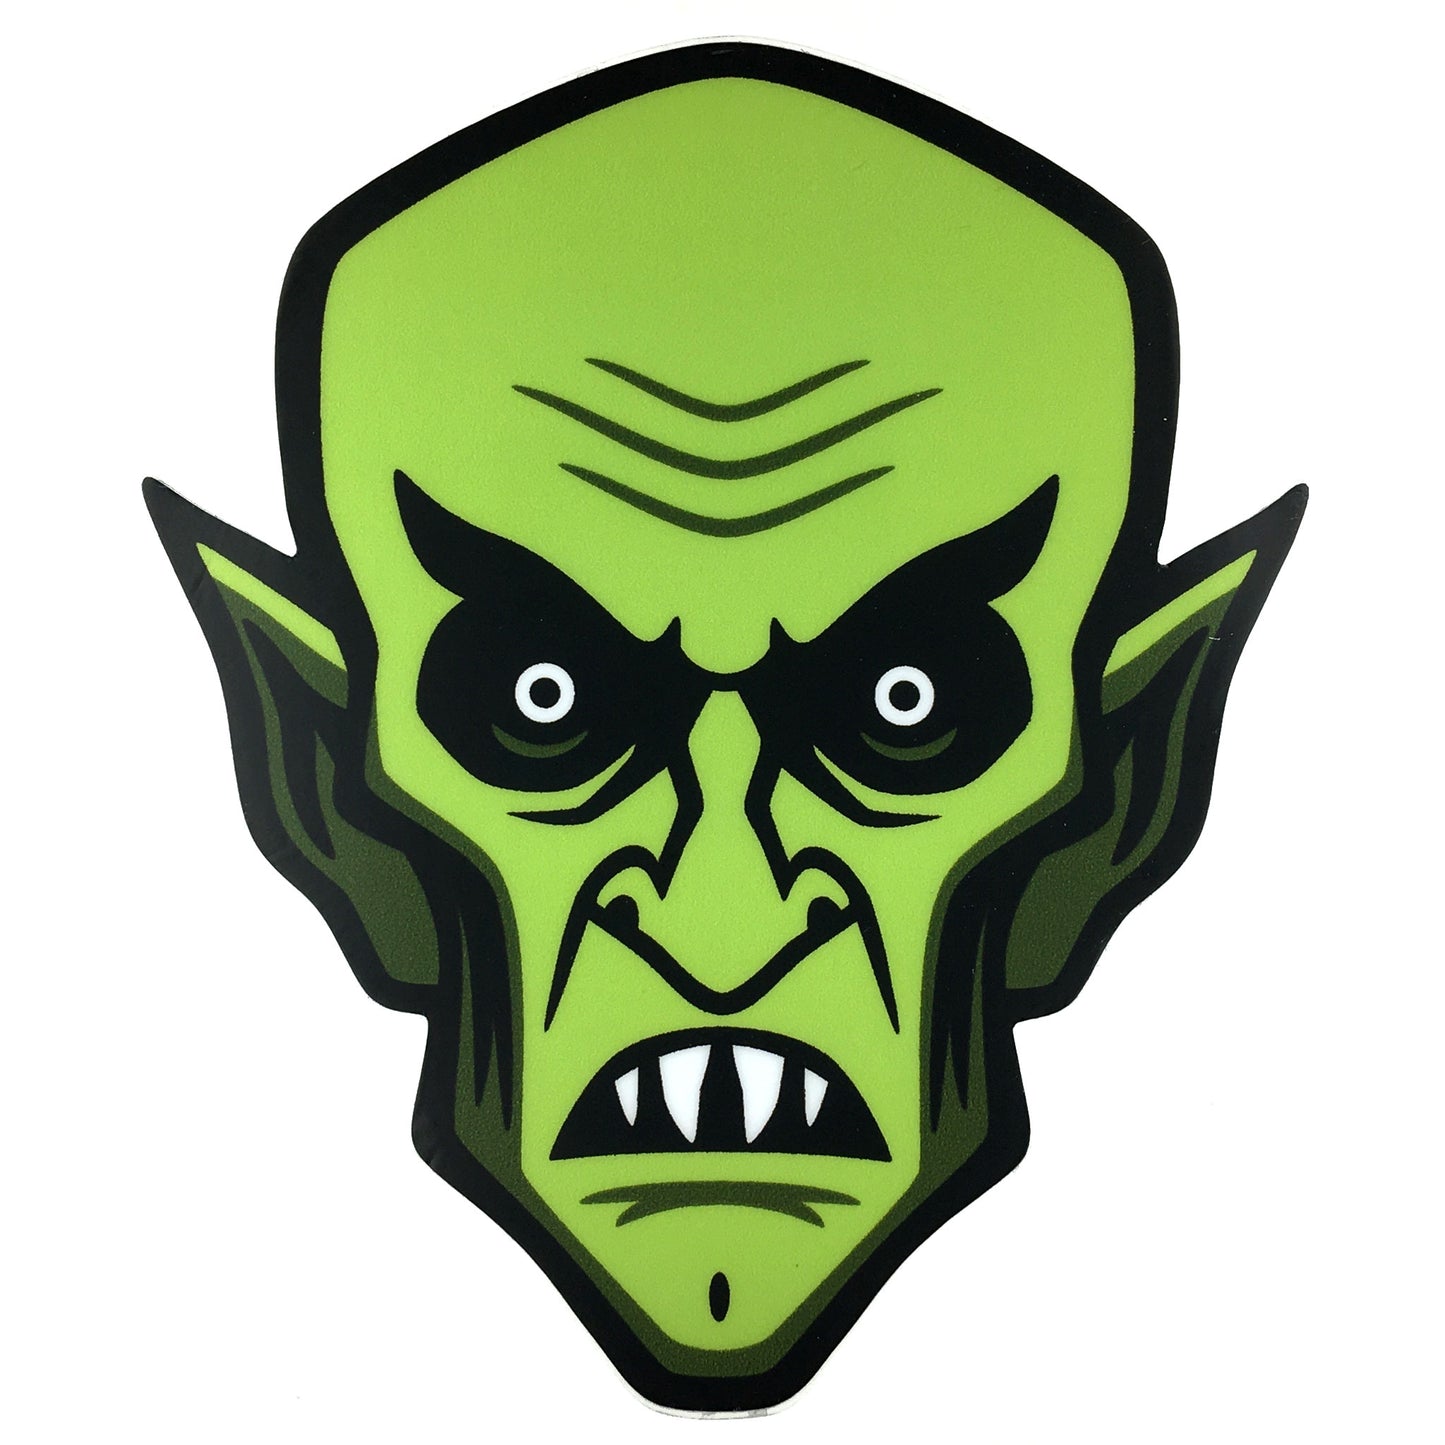 Nosferatu Orlok horror monster sticker by Monsterologist